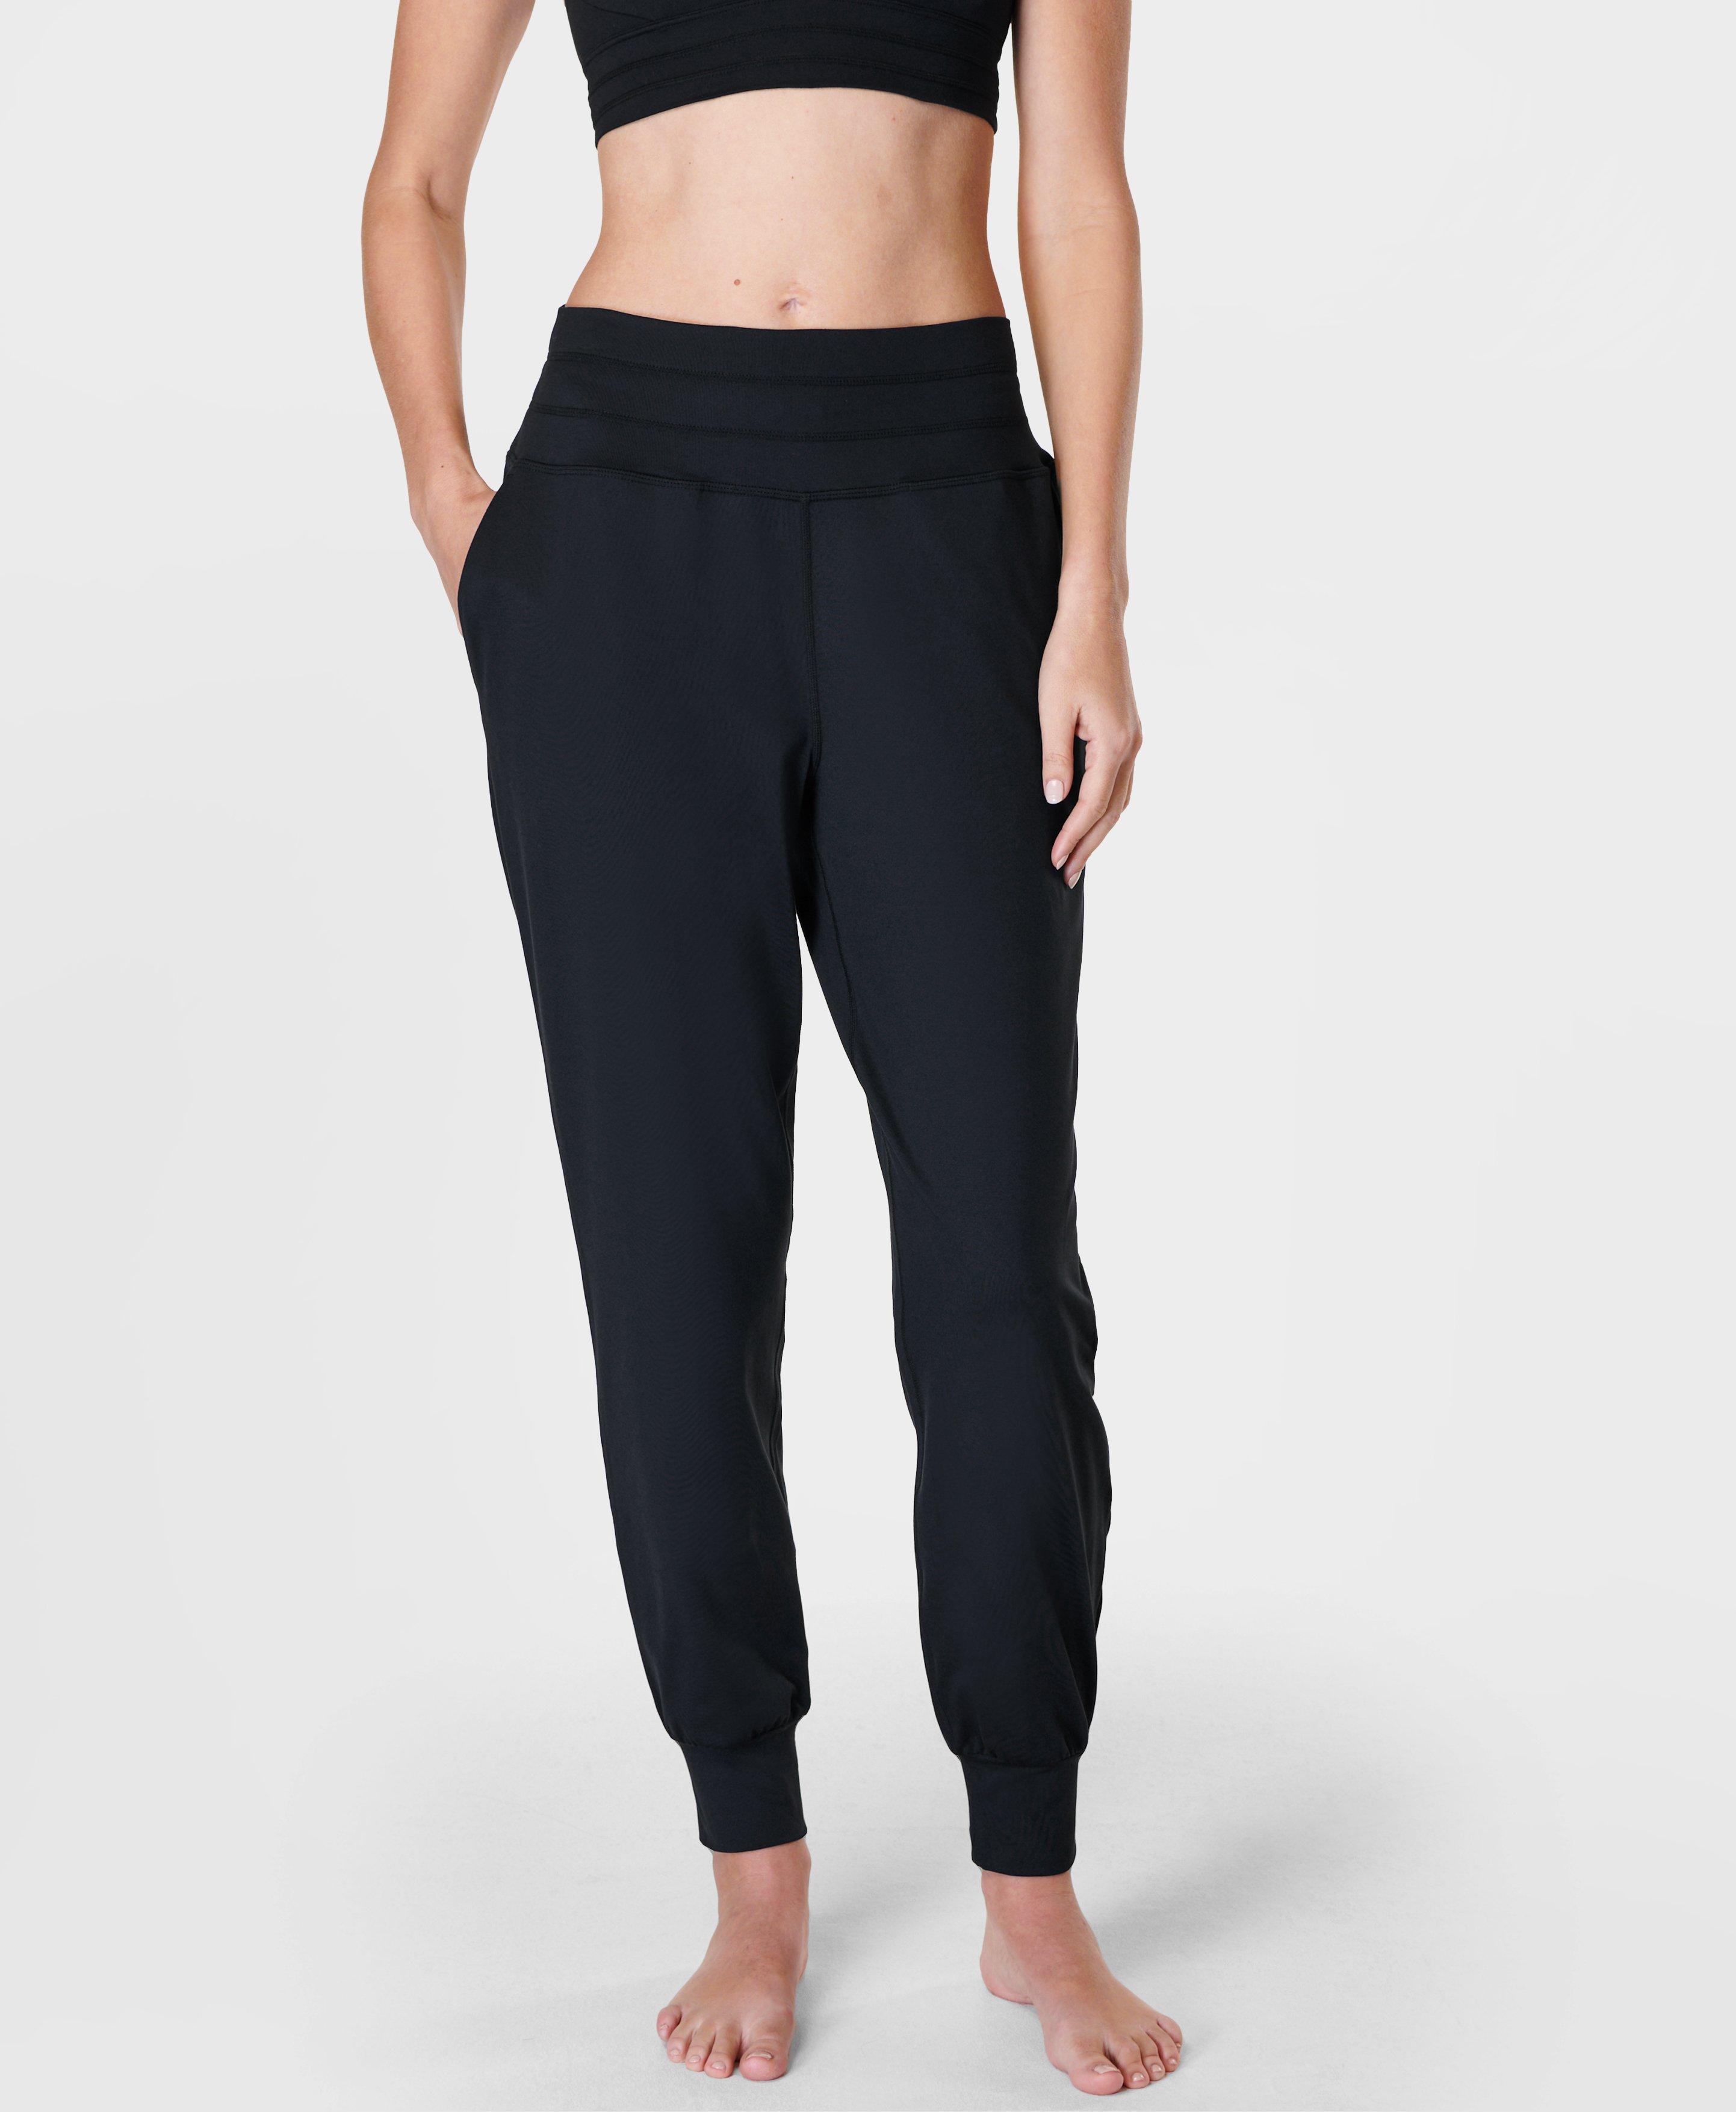 Sweaty Betty Womens Medium Vegetable Leggins Yoga Pants Black Pull